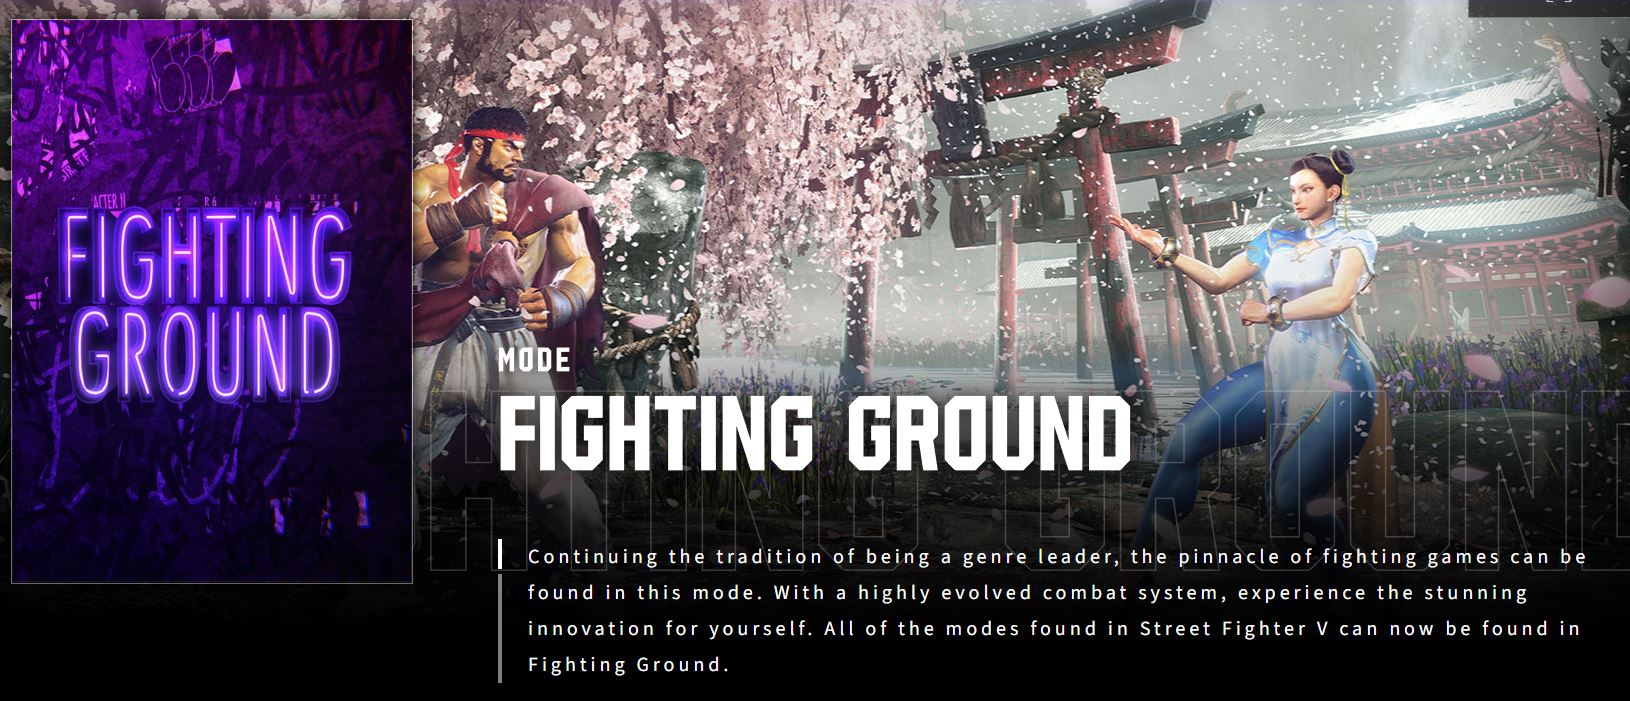 Street Fighter 6's Fighting Ground mode's description.